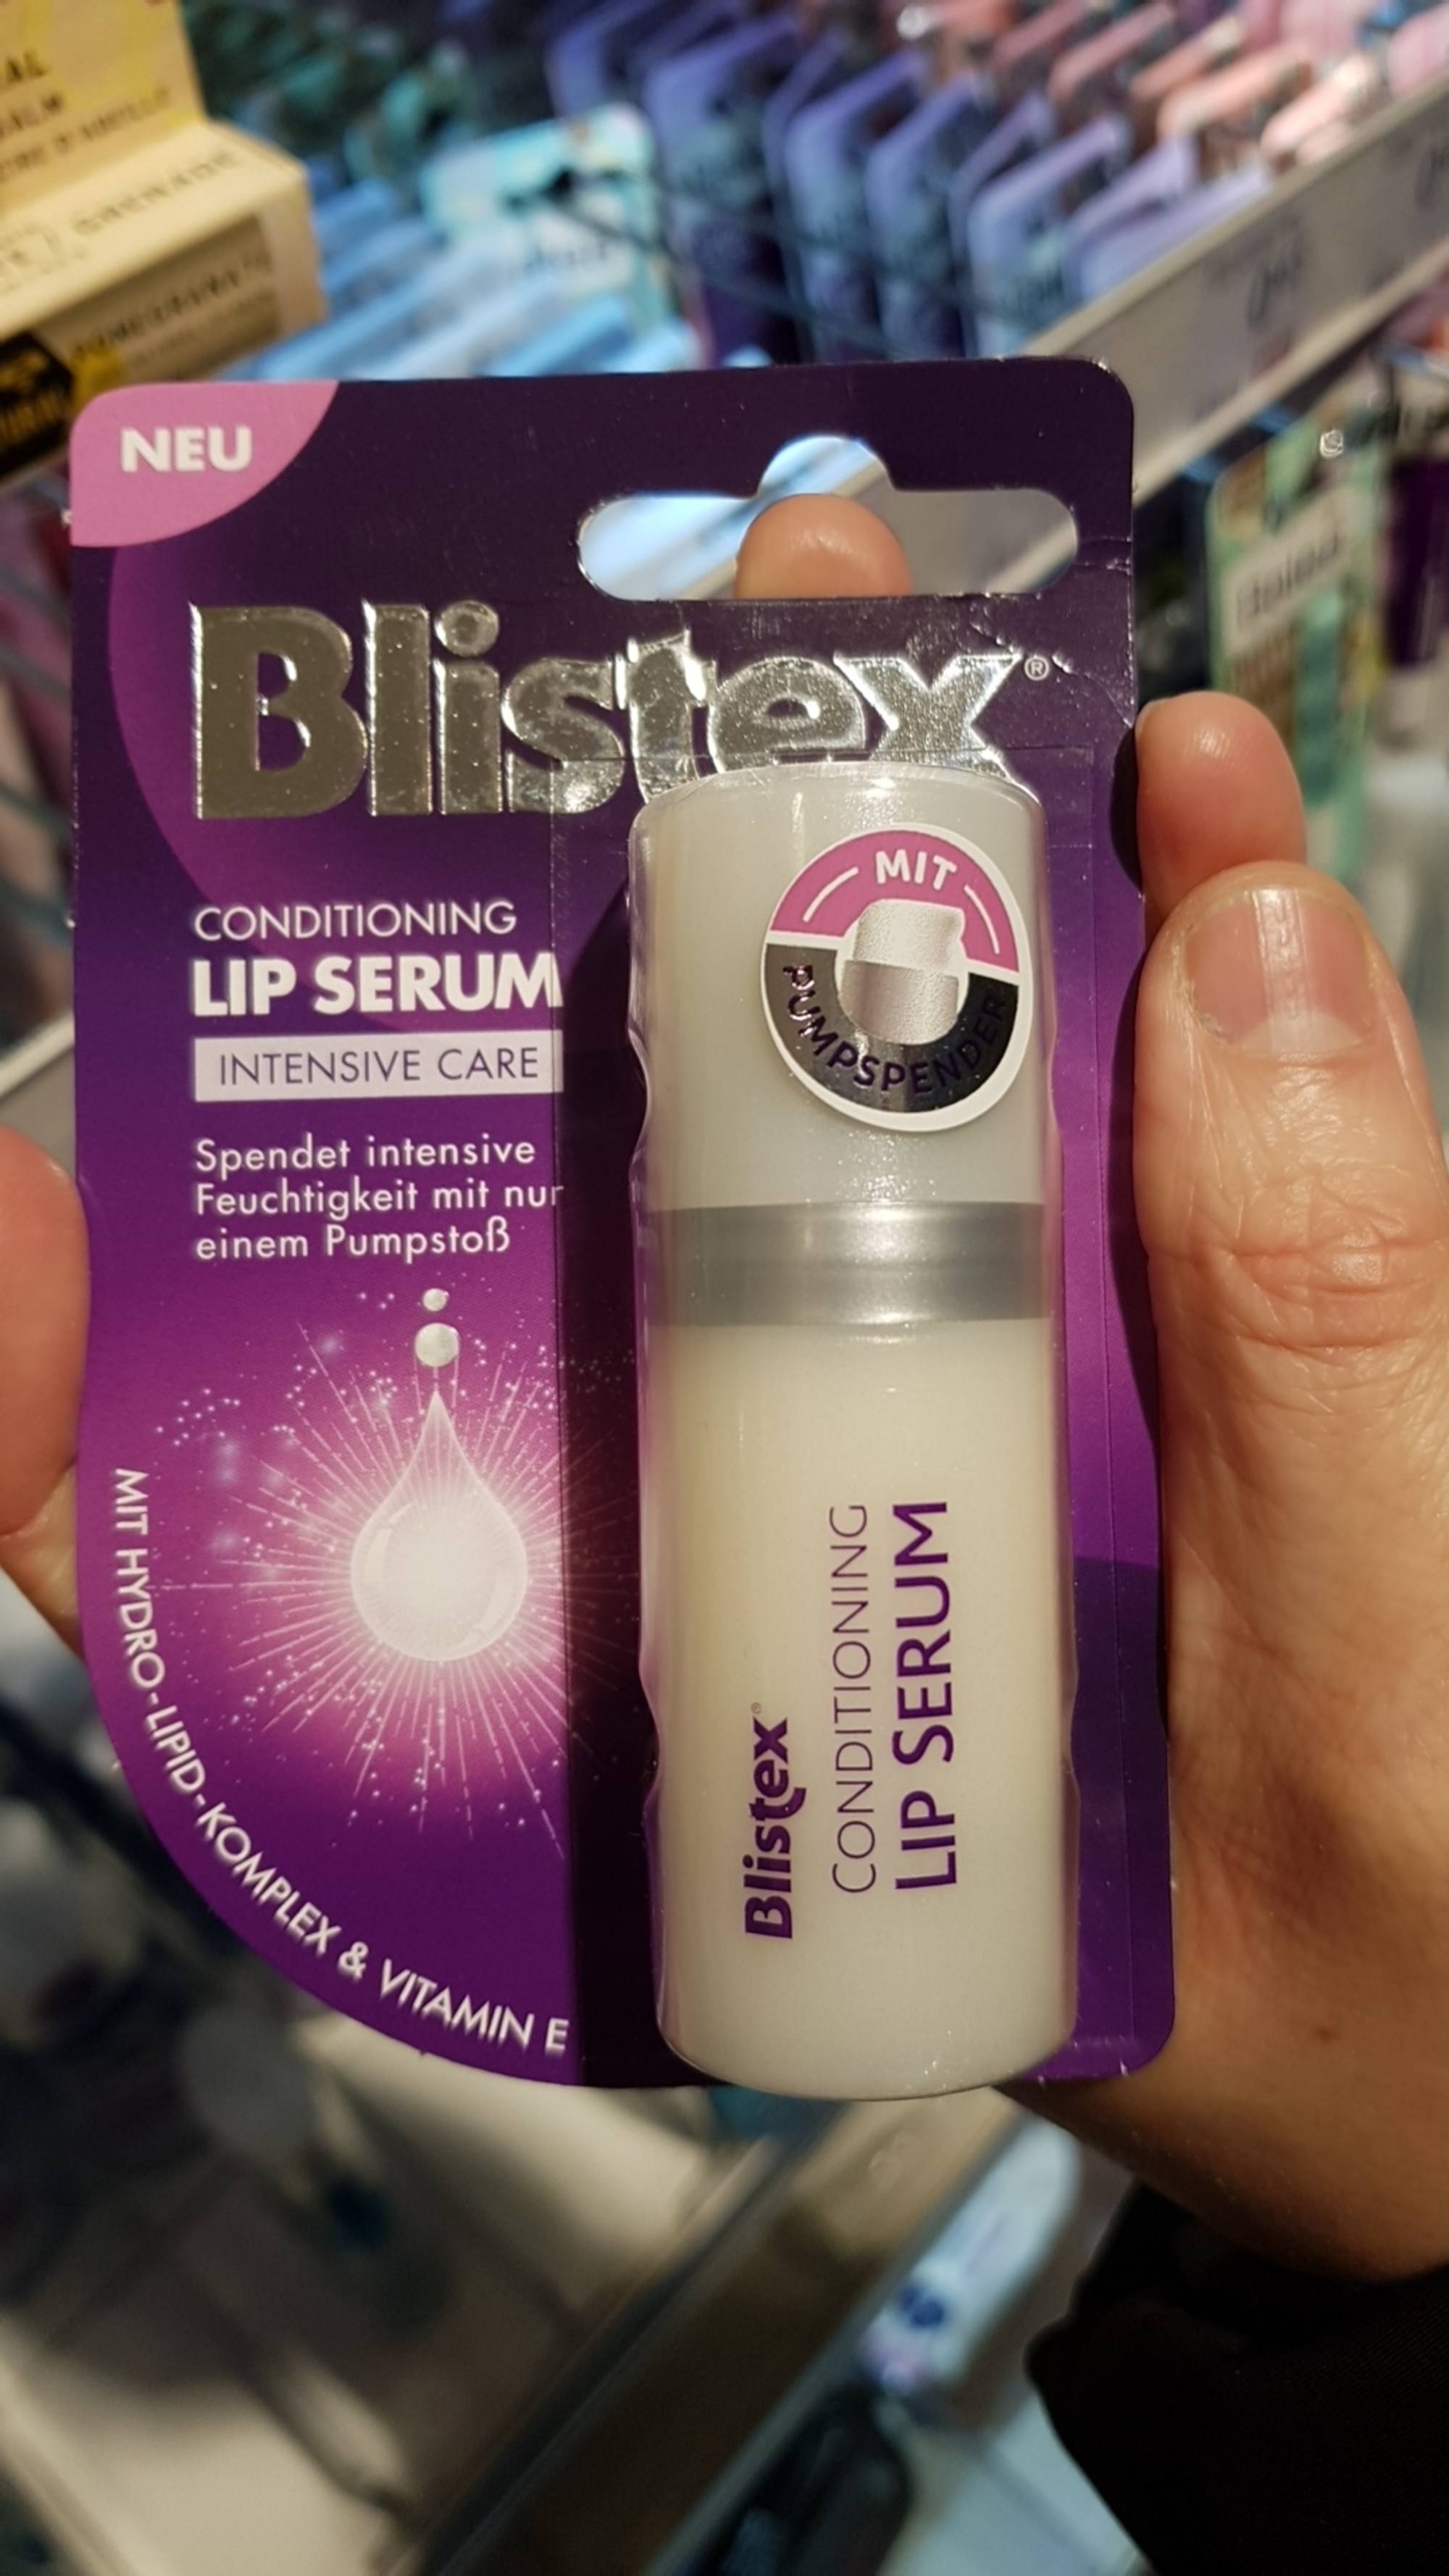 BLISTEX - Conditioning lip serum